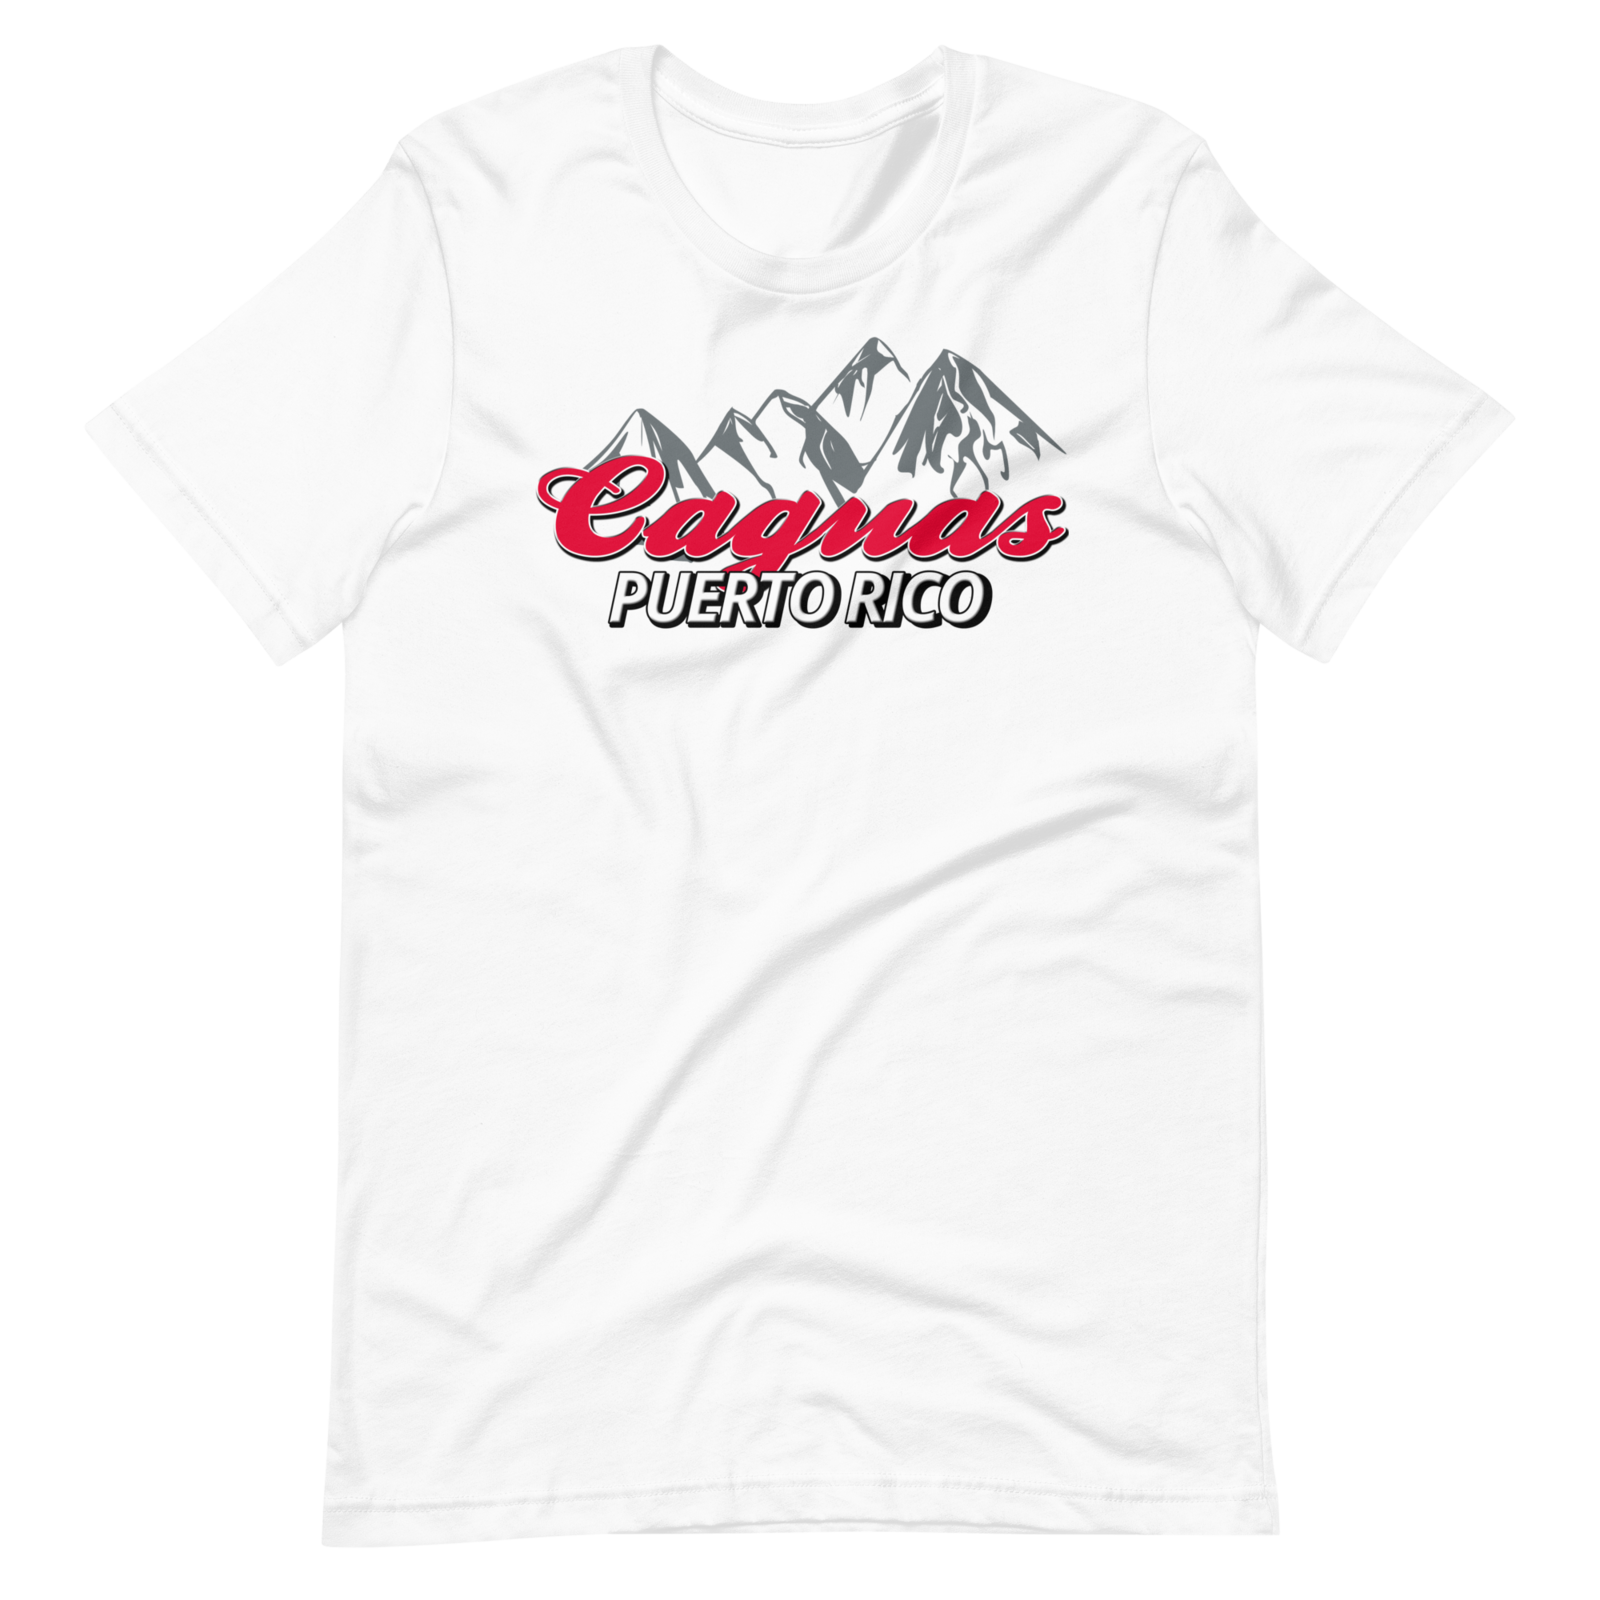 Caguas Puerto Rico Coorz Rocky Mountain  Style Unisex Staple T-Shirt - $25.00